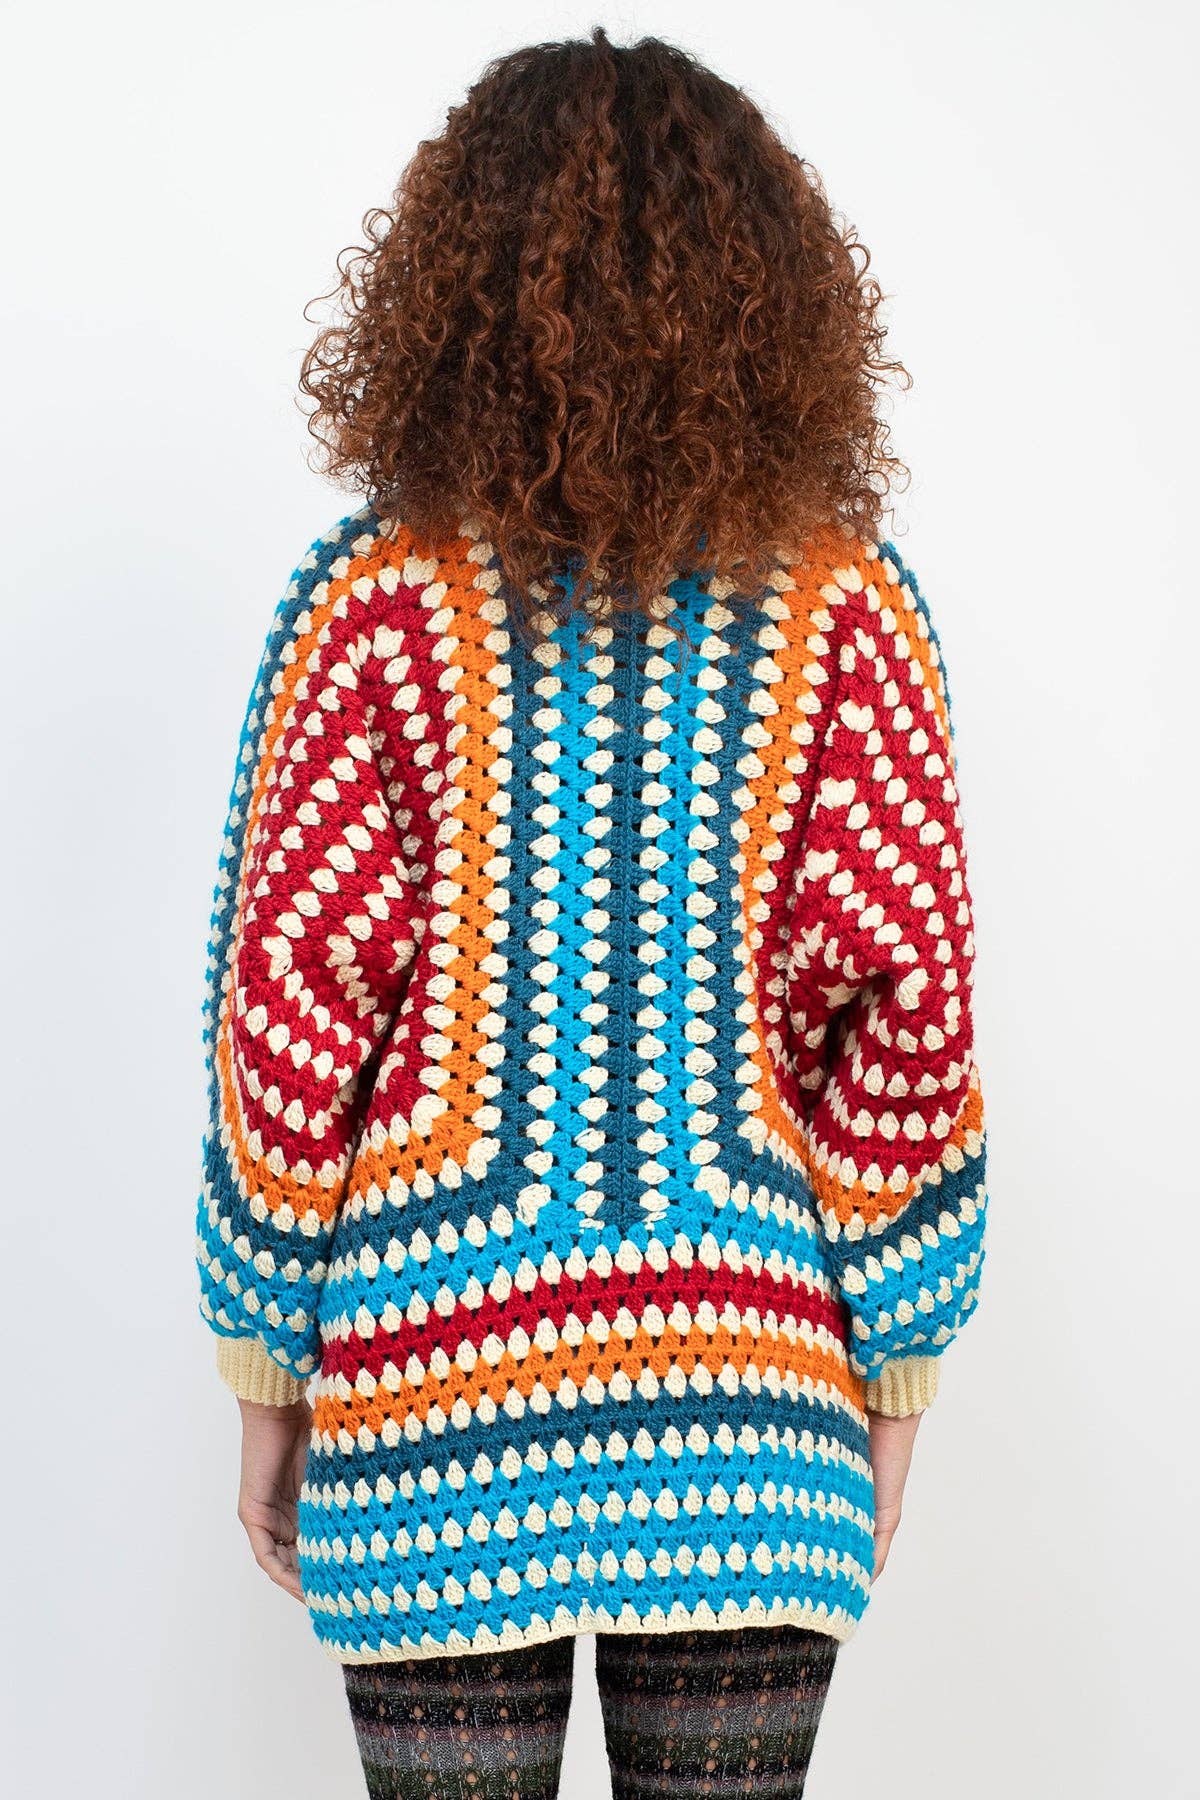 Fiesta Crocheted Cardigan: S/M